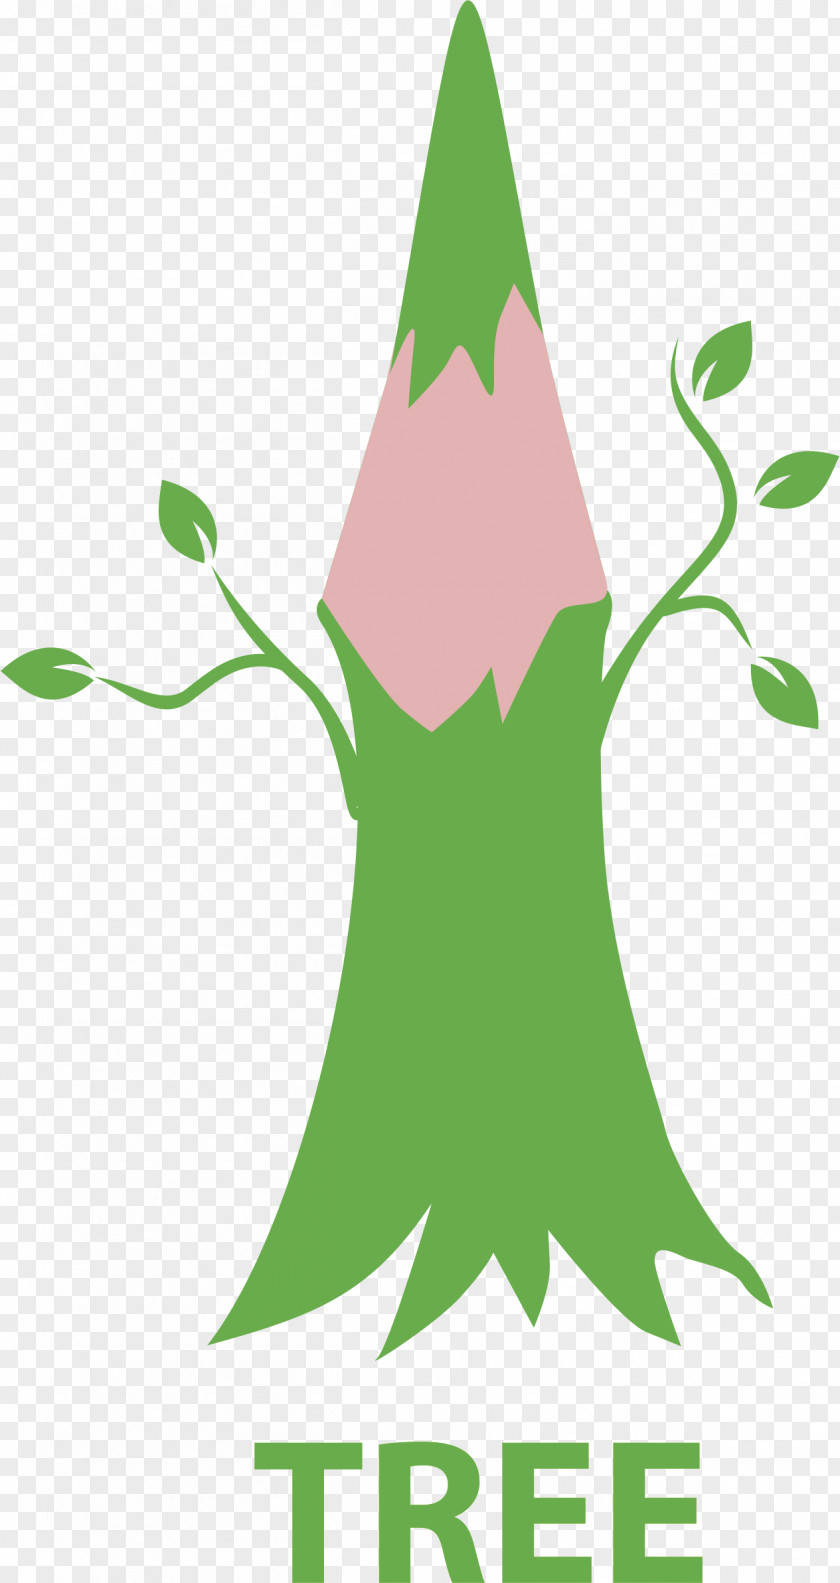 Pencil Tree Royalty-free Logo Illustration PNG